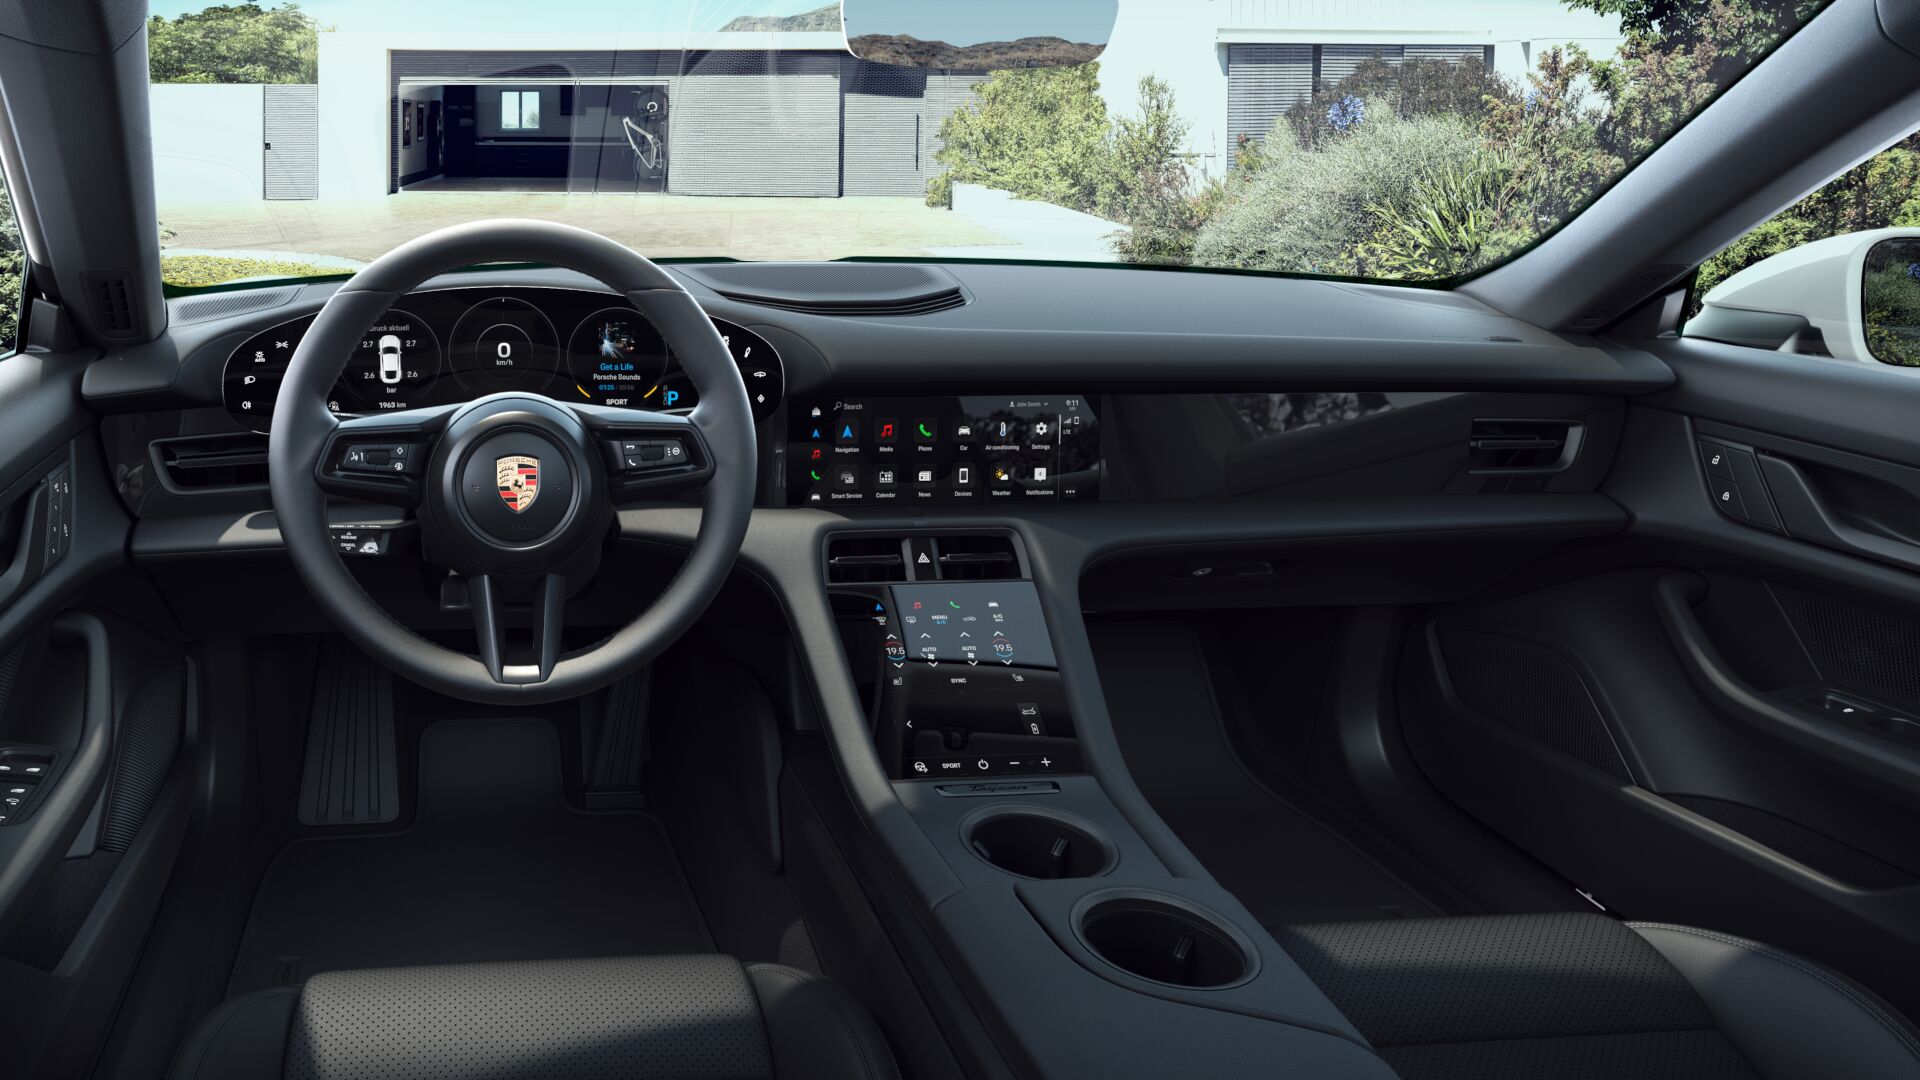  Technology meets class in the new Porsche SUV range; explore the Porsche Taycan interior at your premier Porsche Center in Collier County, Florida